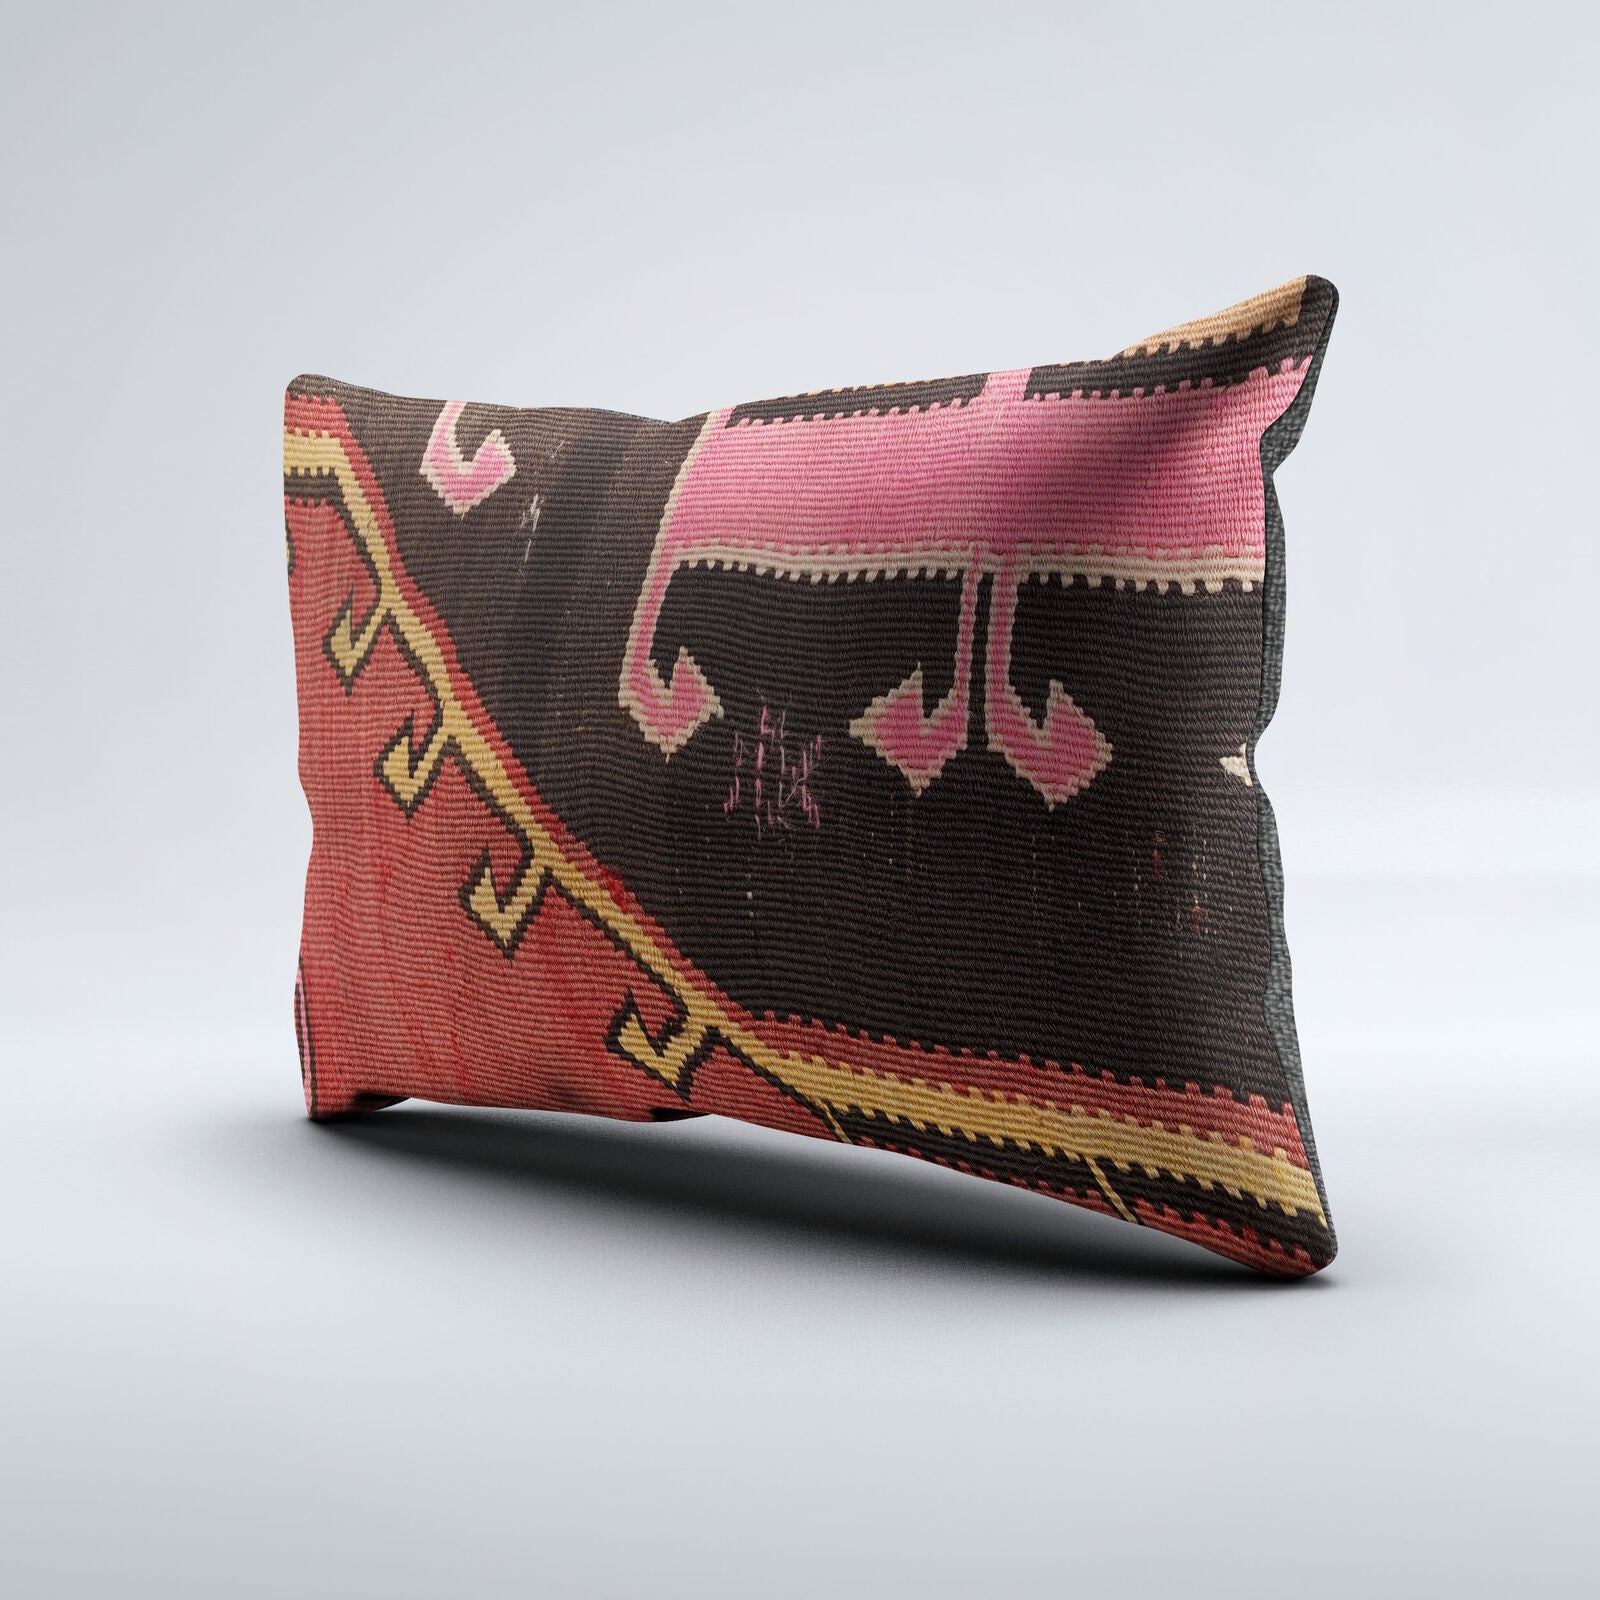 Vintage Turkish Kilim Cushion Cover 60x40 cm Wool Kelim Pillowcase 64657